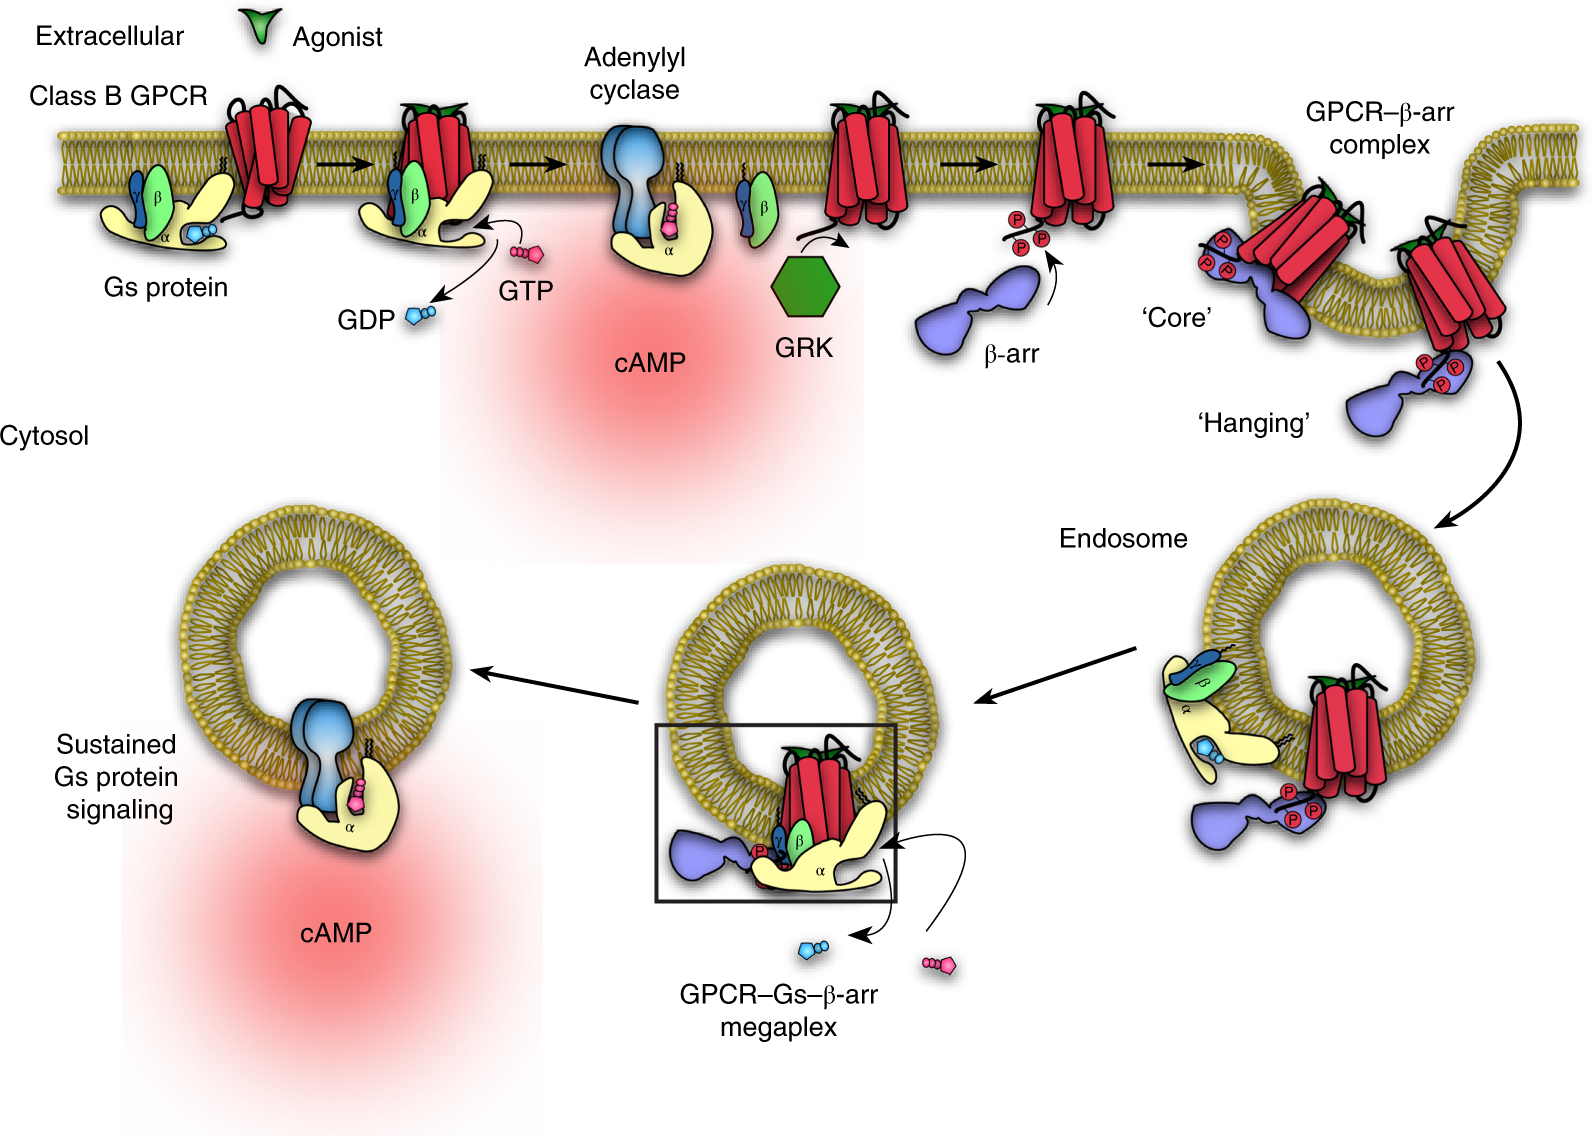 Structure Of An Endosomal Signaling Gpcr G Protein B Arrestin Megacomplex Nature Structural Molecular Biology